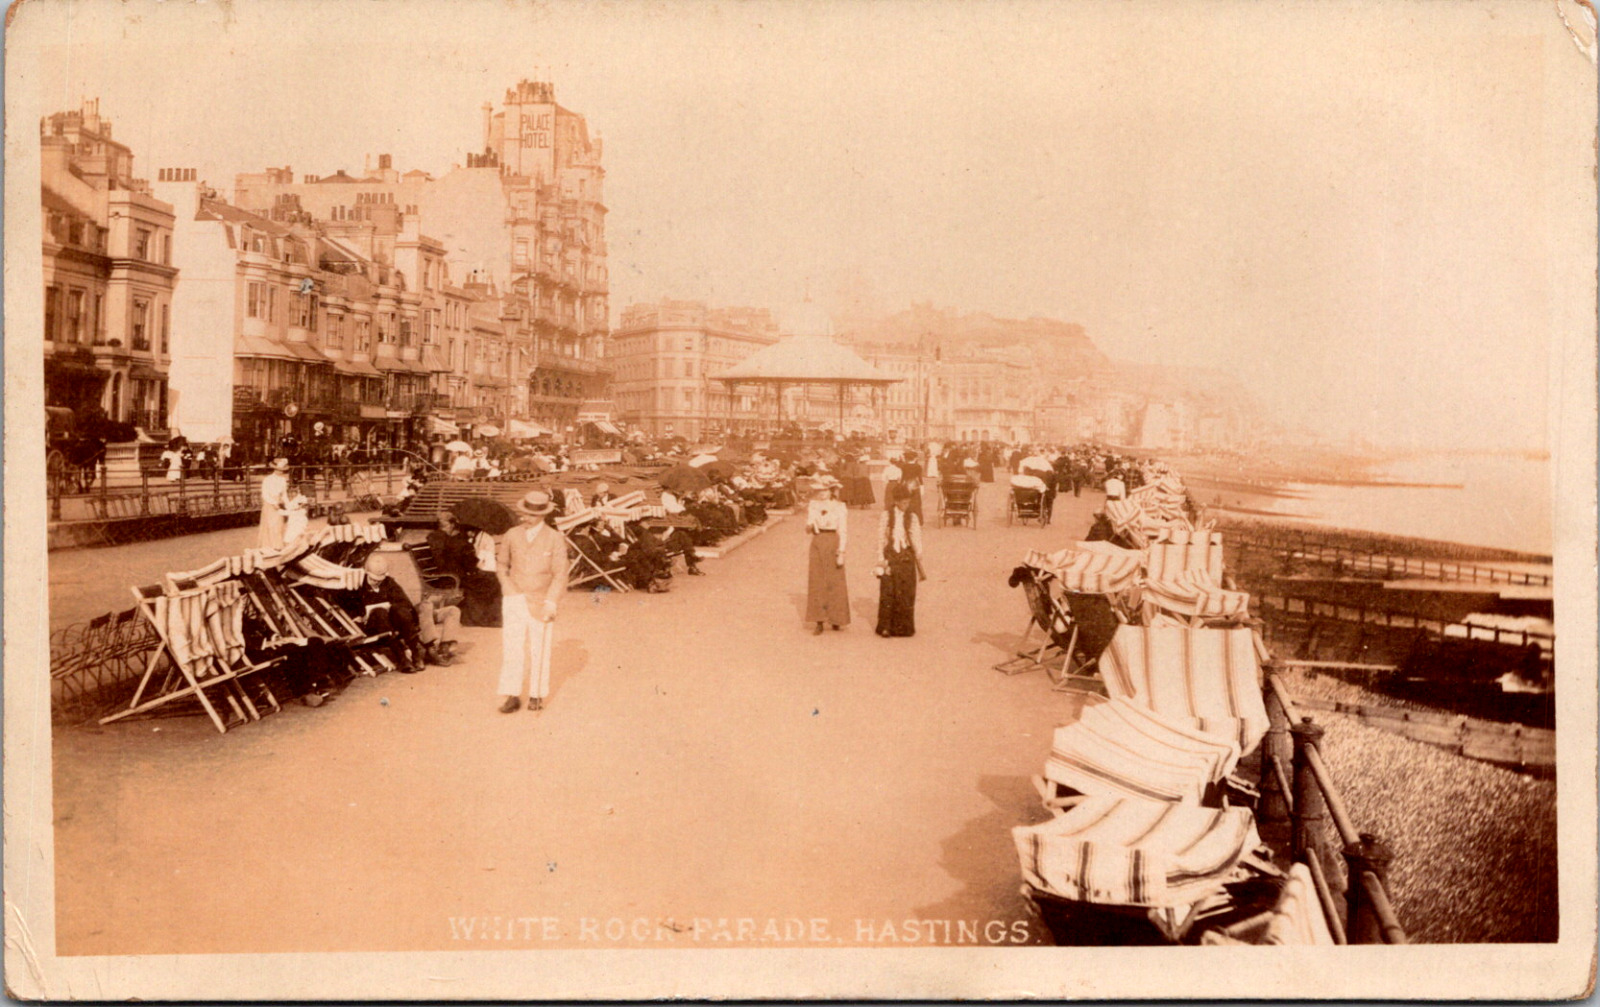 Vintage C. 1907 RPPC Whiterock Parade Hastings Killinchy Down Ireland Postcard